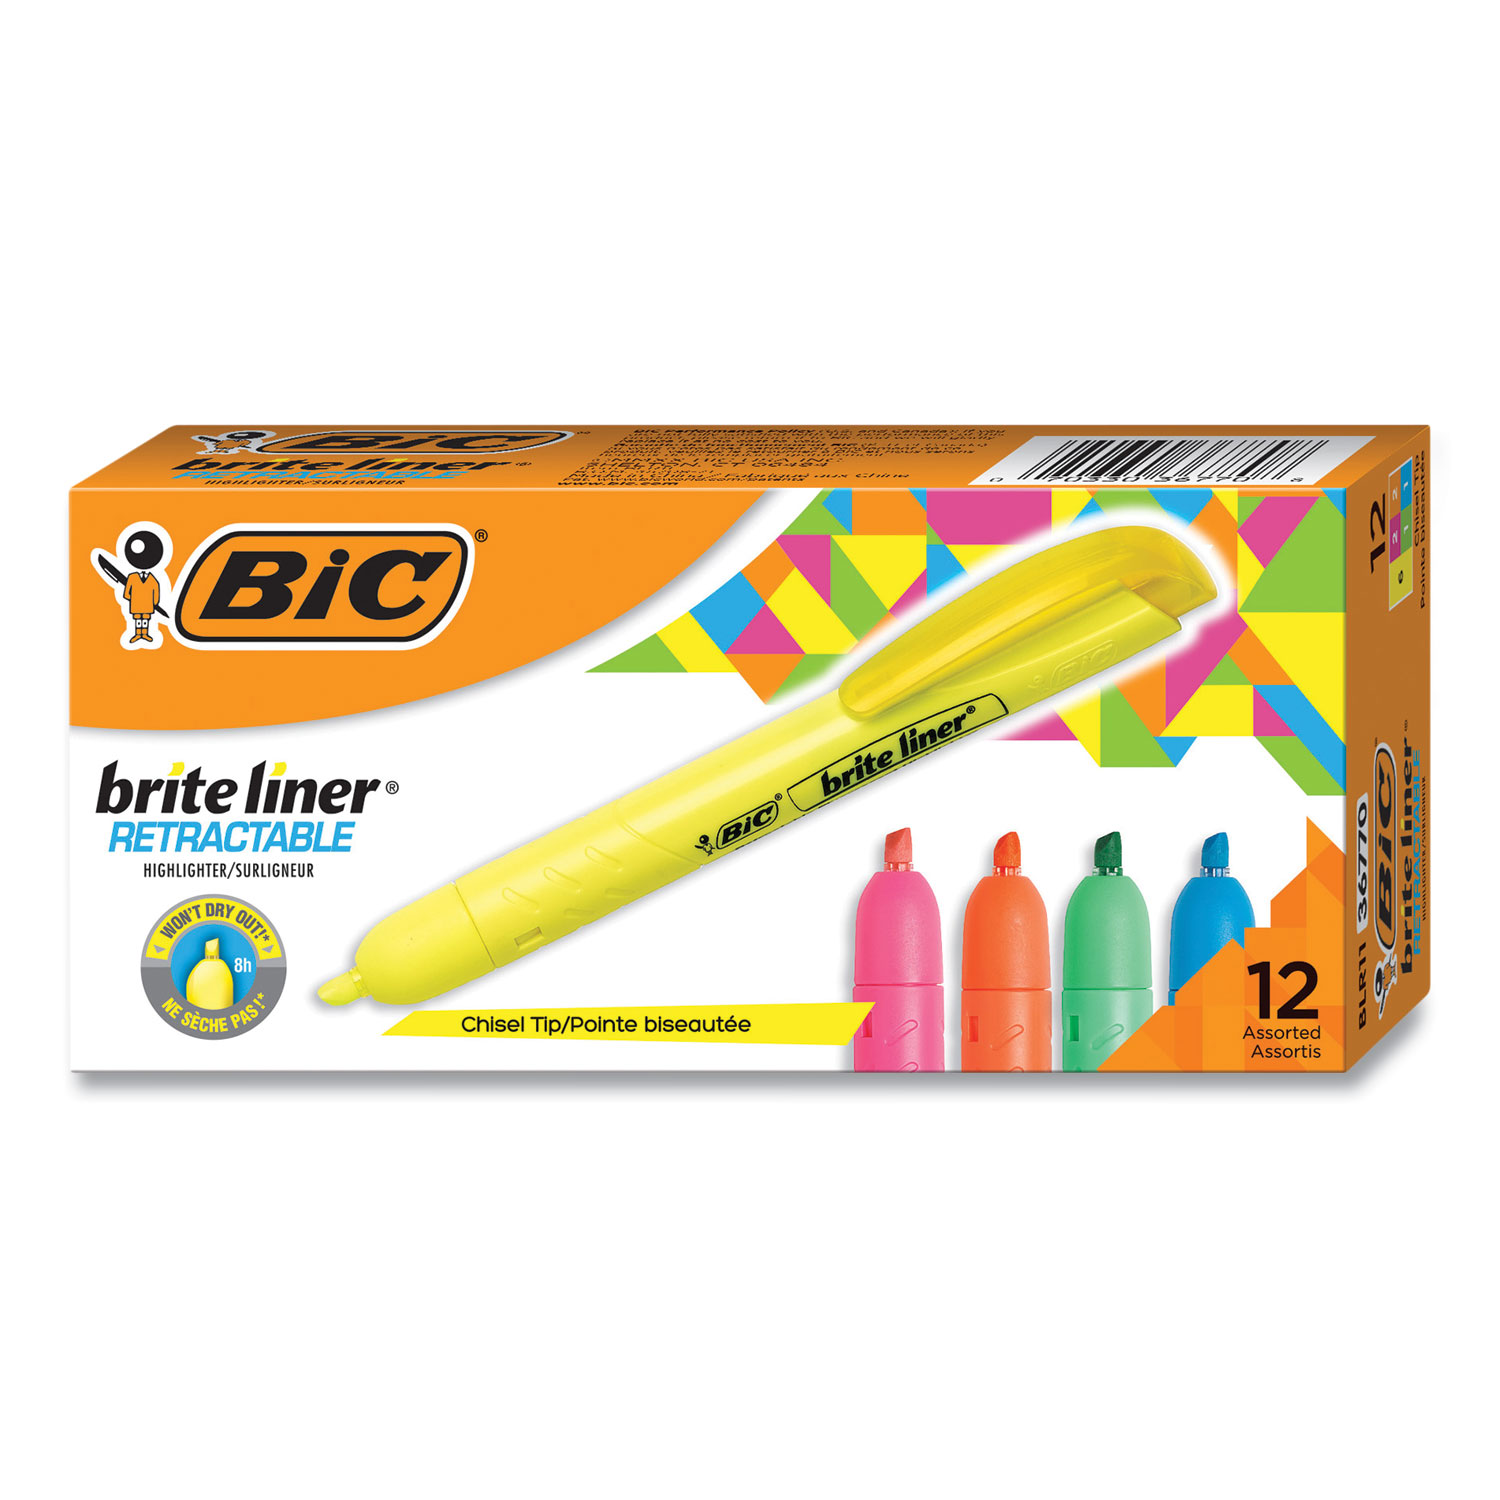 BIC® Brite Liner Retractable Highlighter, Chisel Tip, Assorted Colors, Dozen